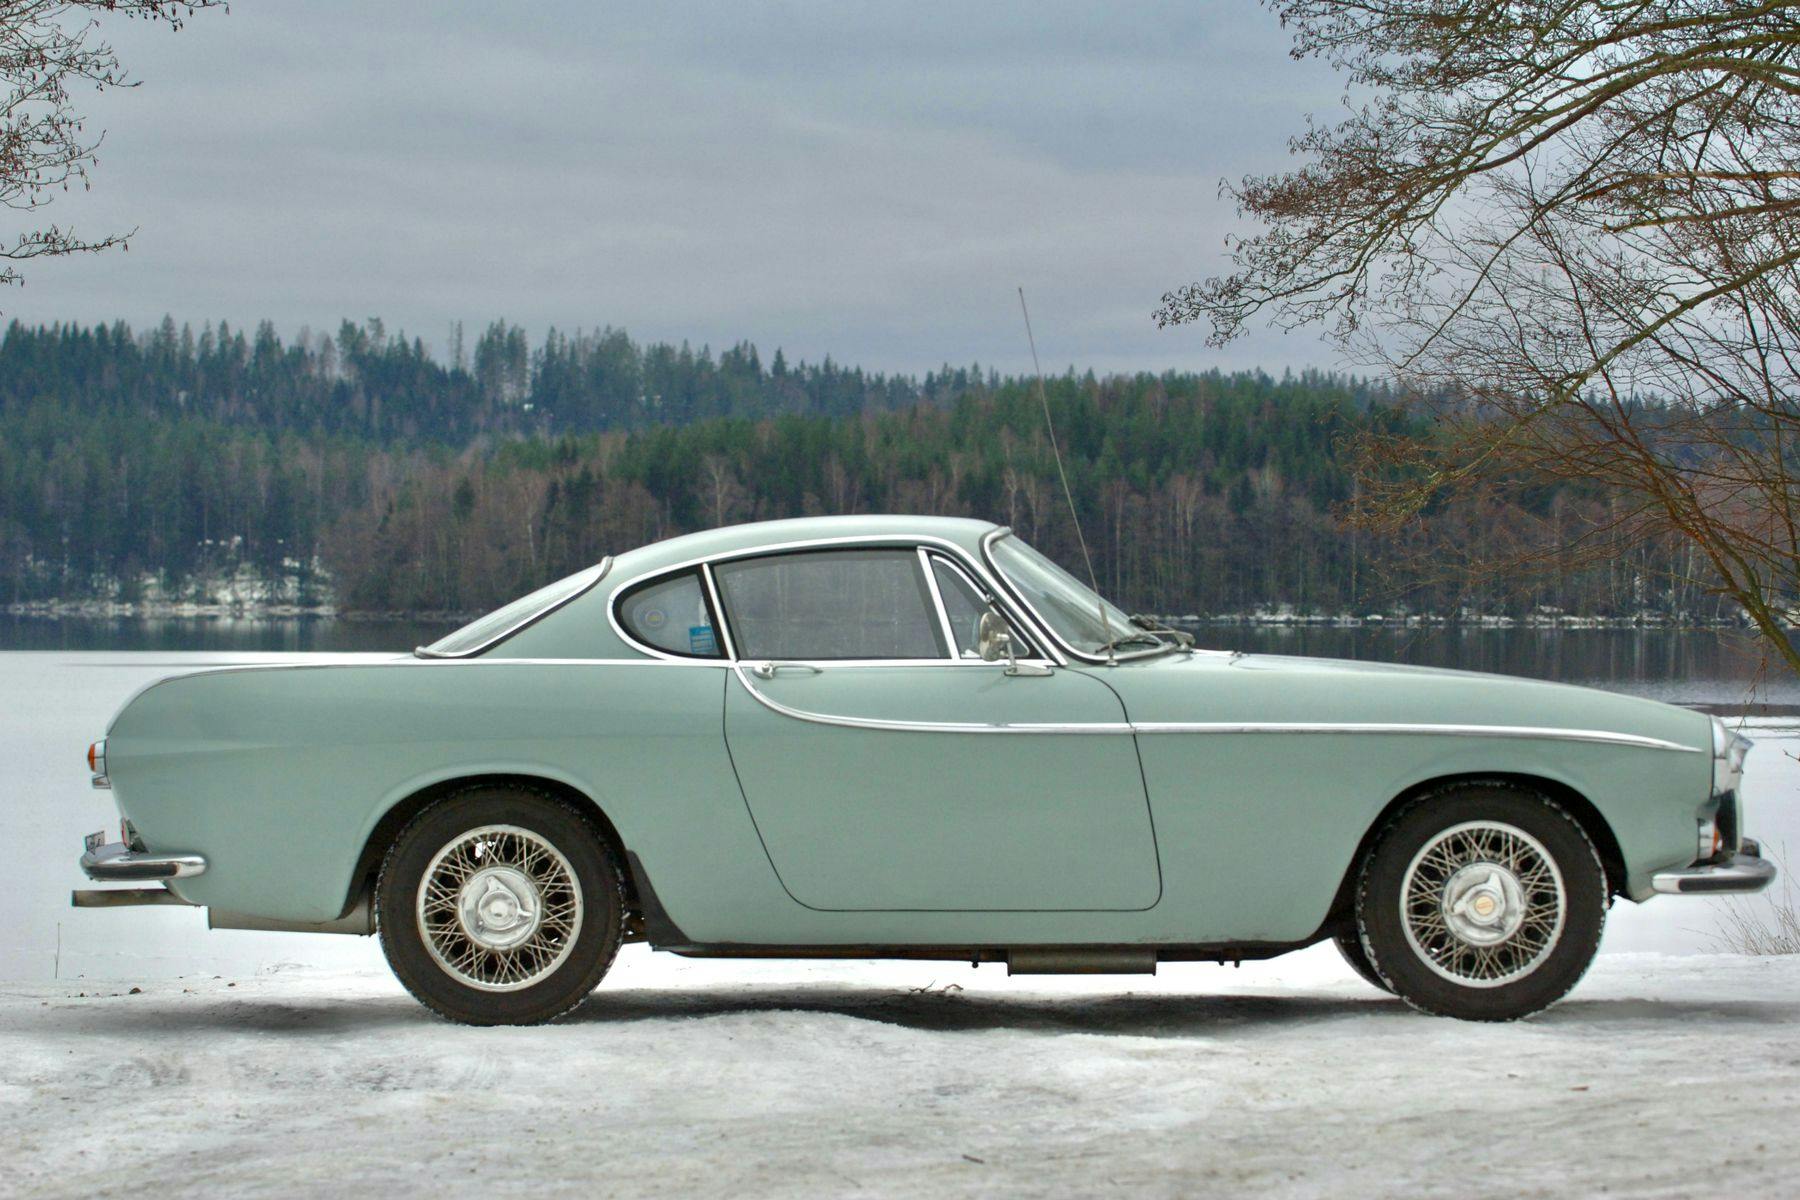 King of Sweden's 1966 Volvo 1800S 4